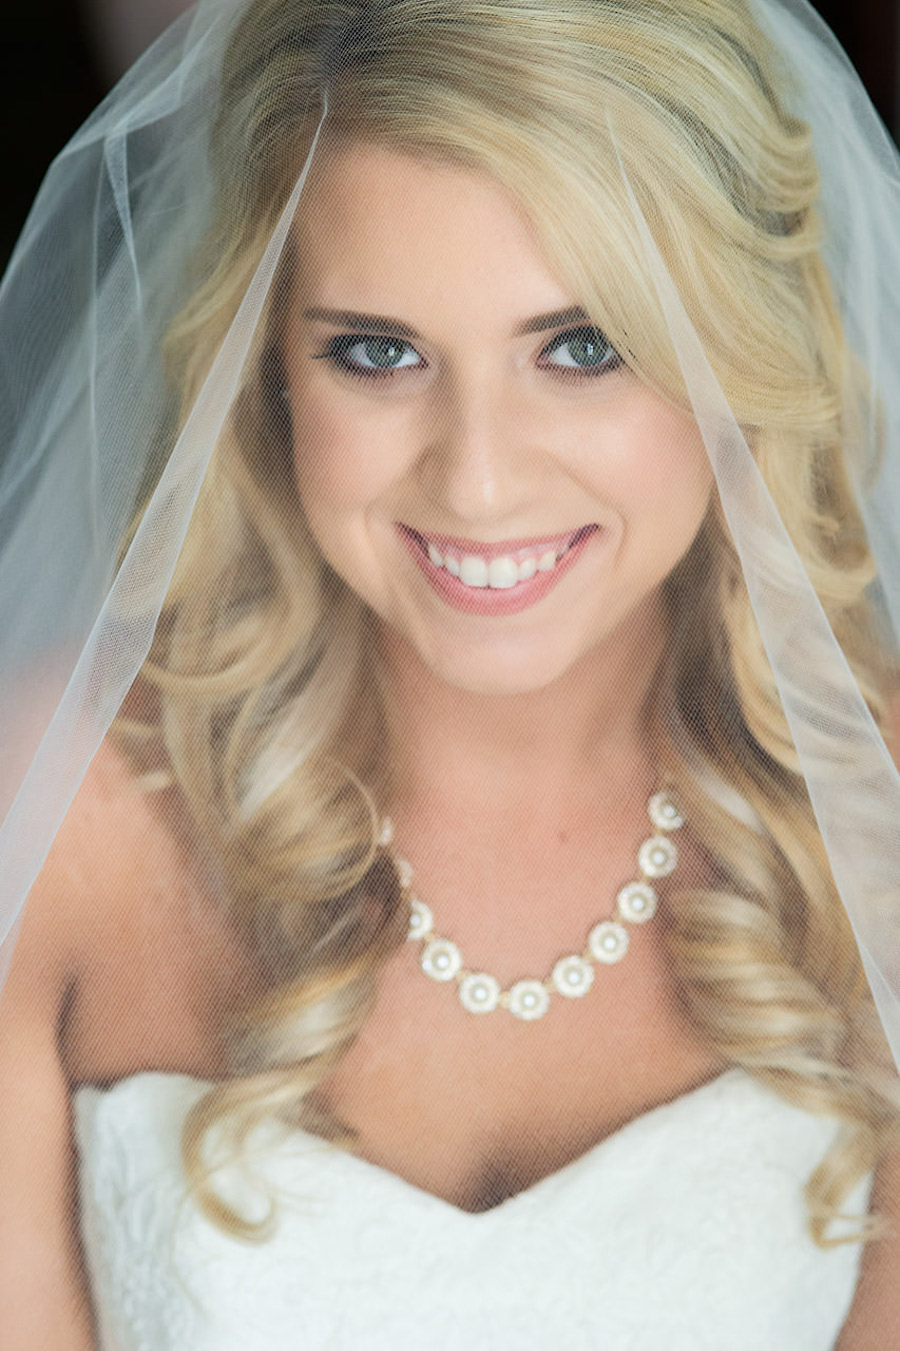 Classic Bridal Wedding Day Hair and Makeup | Tampa Bay Wedding Photographer Jeff Mason Photography